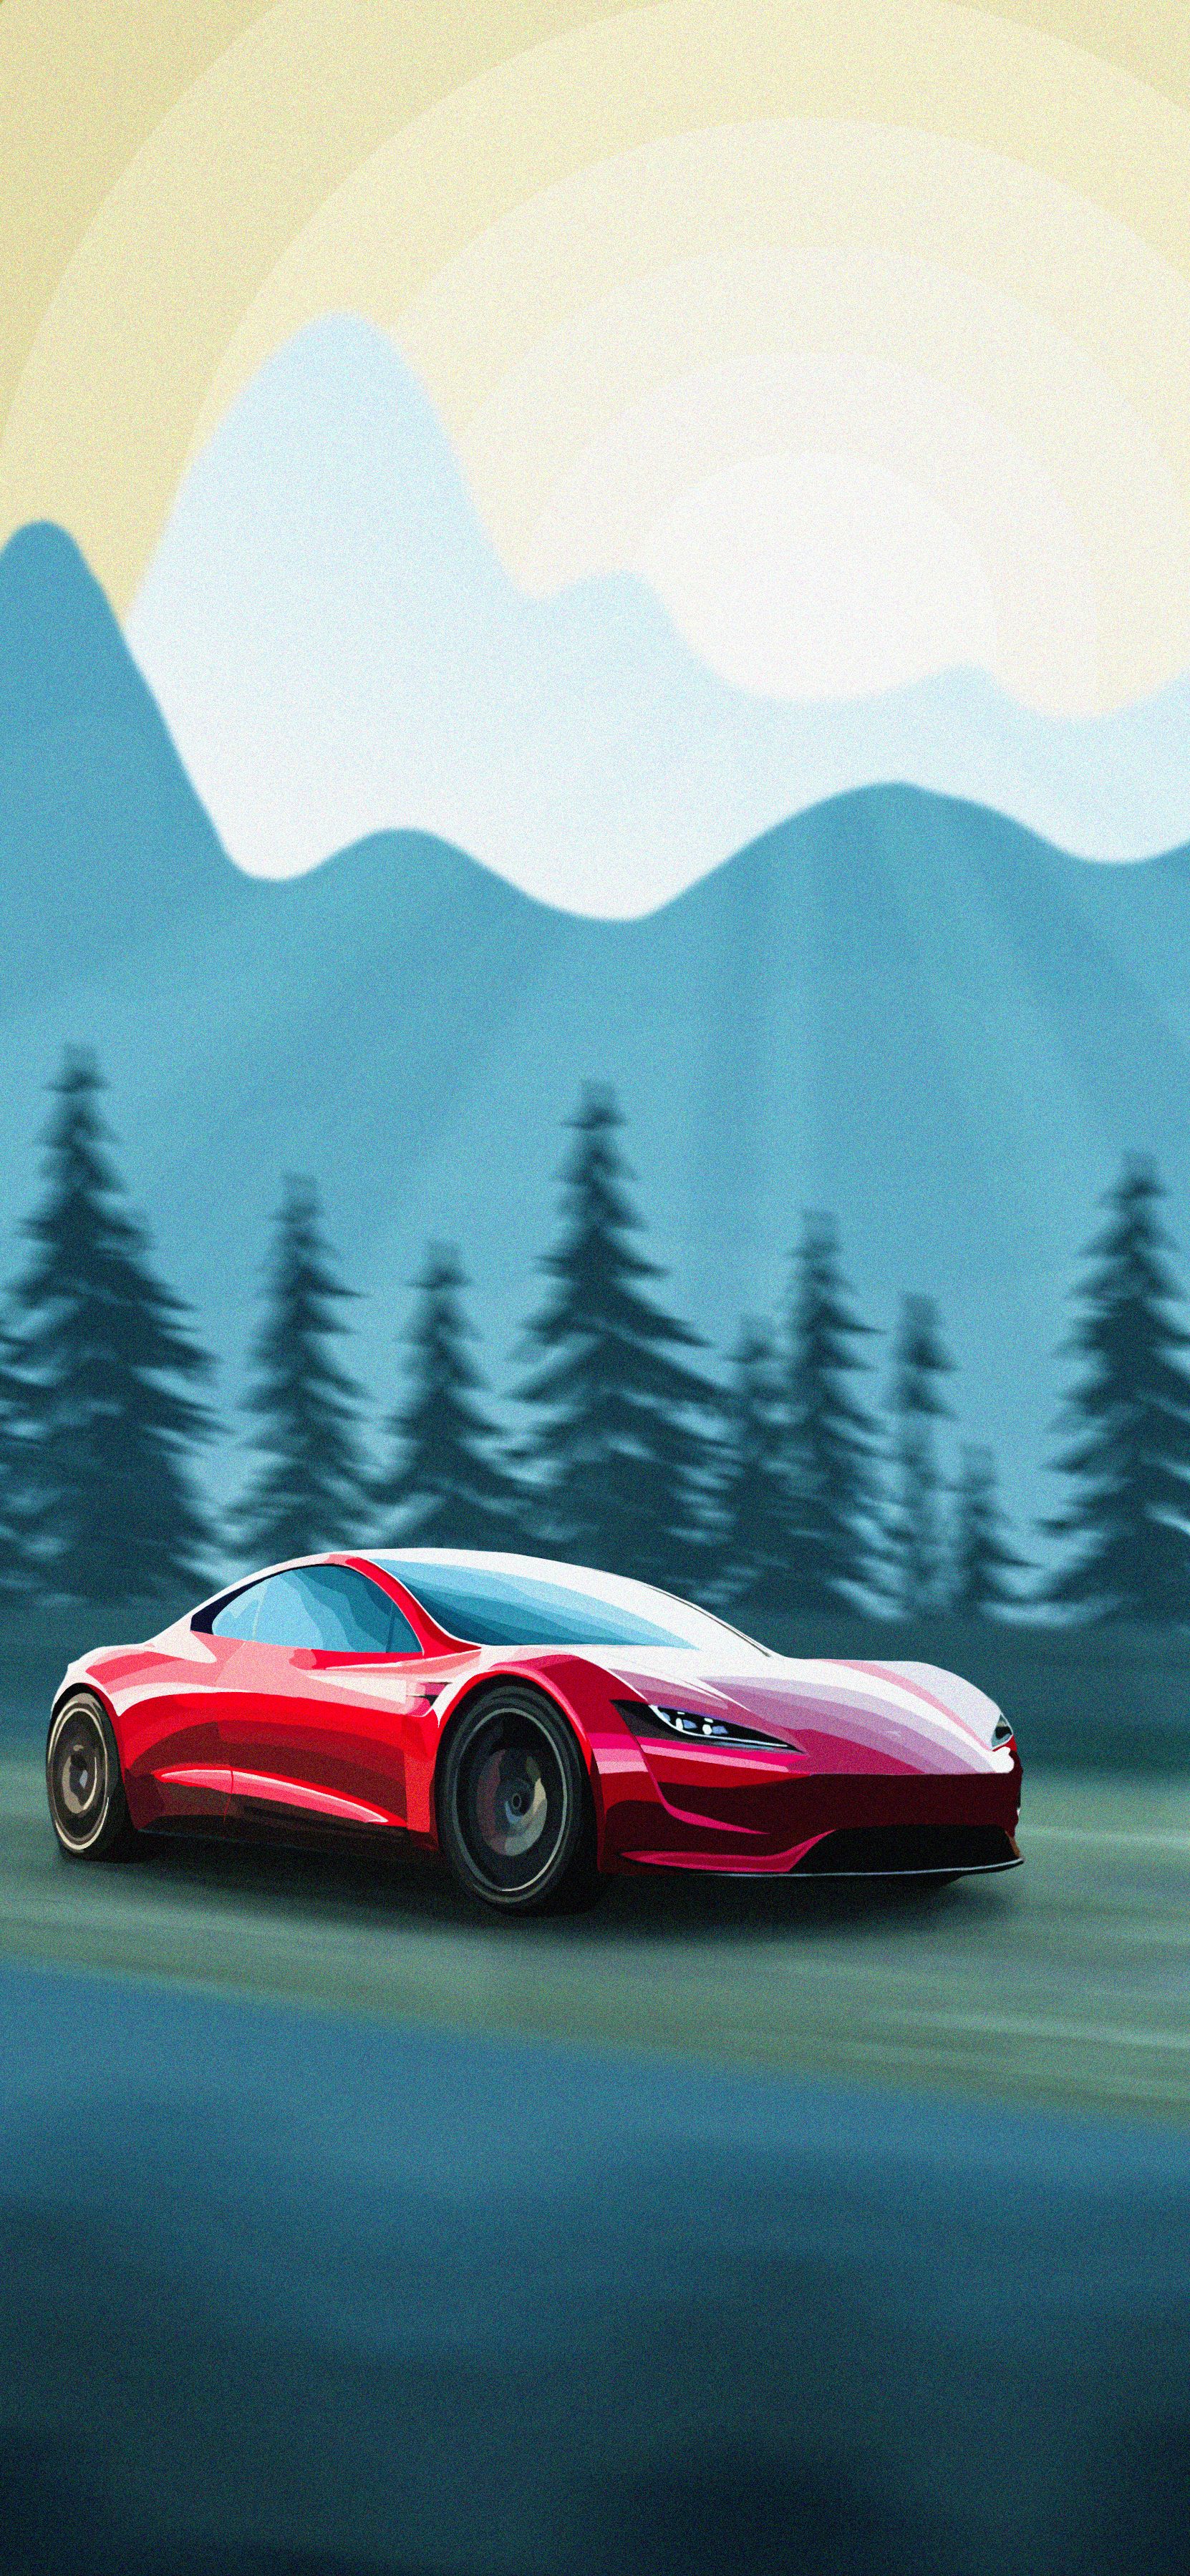 Supercars Gallery: Tesla Roadster iPhone Wallpaper